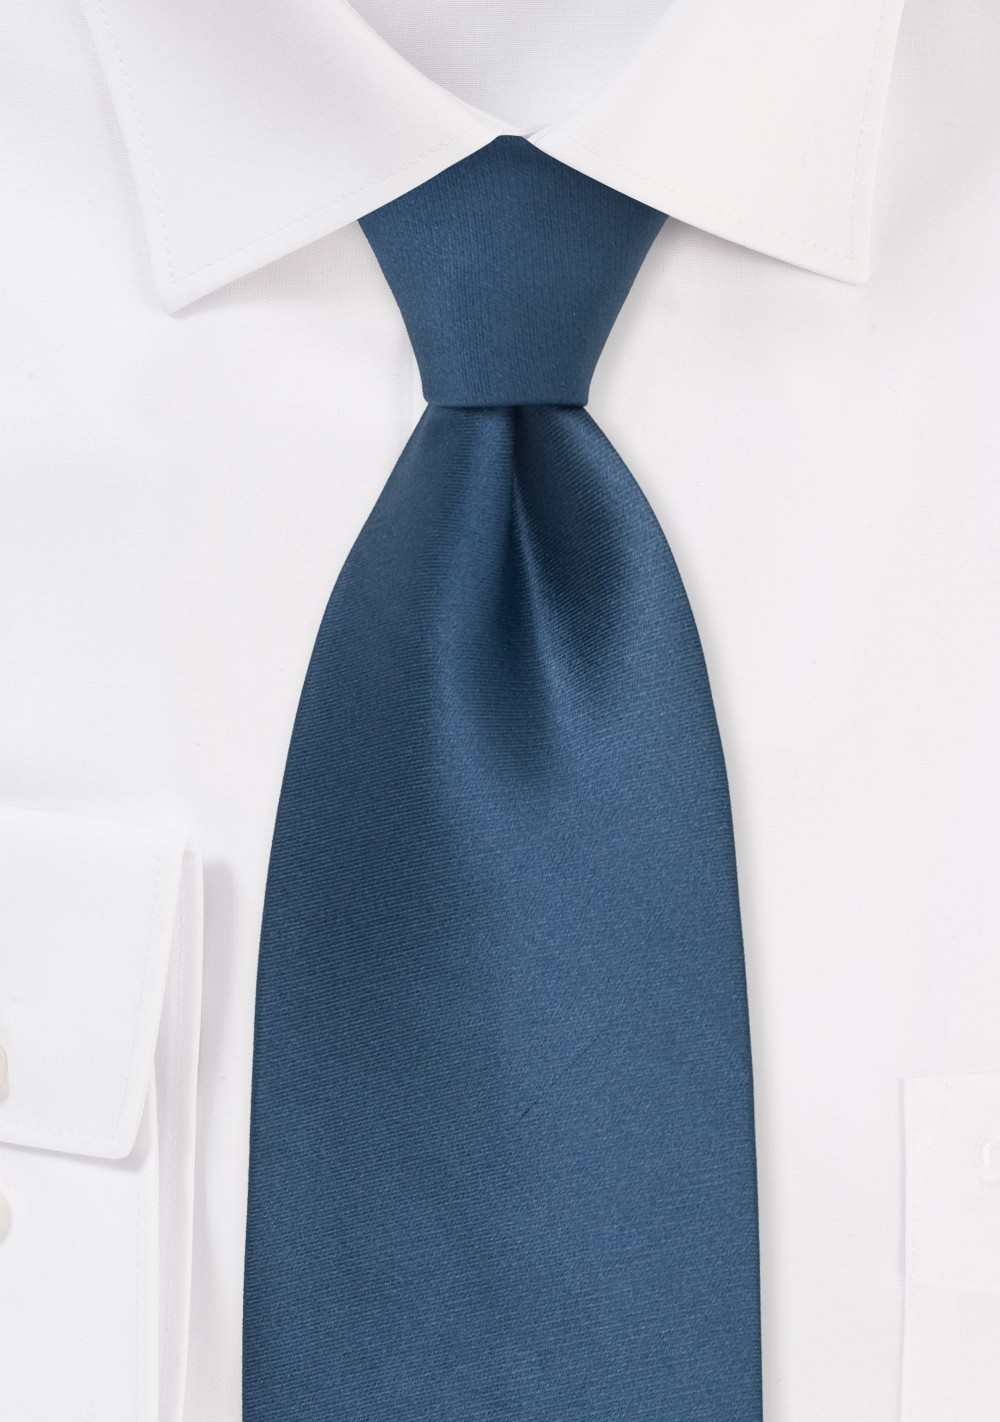 Solid Blue Ties - Necktie in Steel-Blue